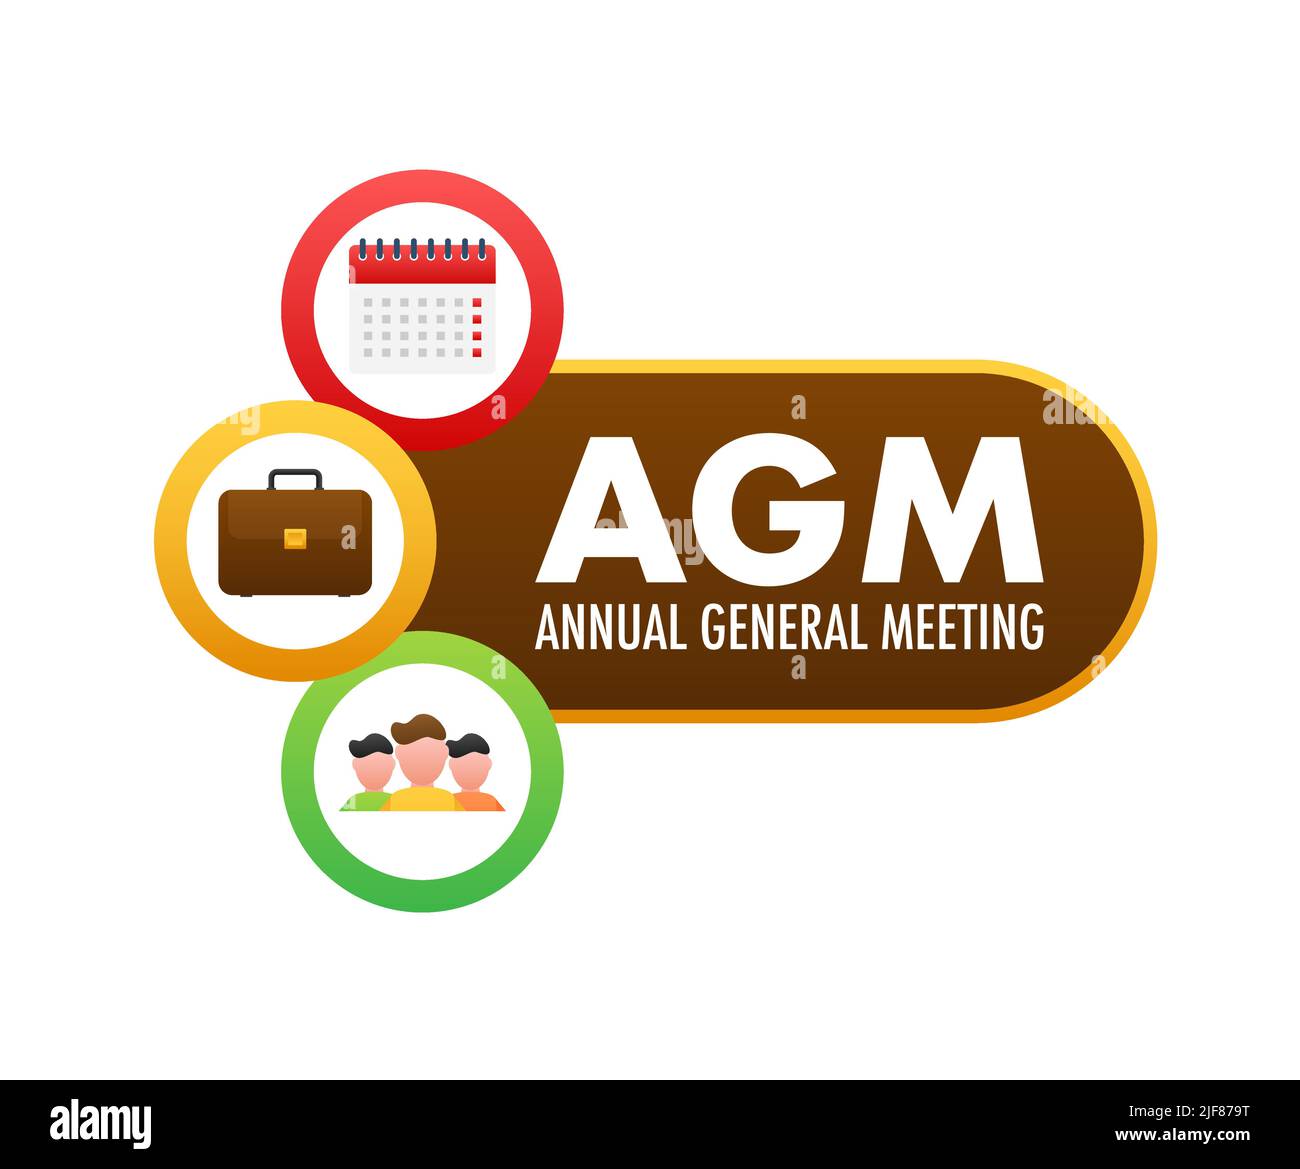 AGM - Annual general meeting. Calendar reminder. Vector stock illustration. Stock Vector